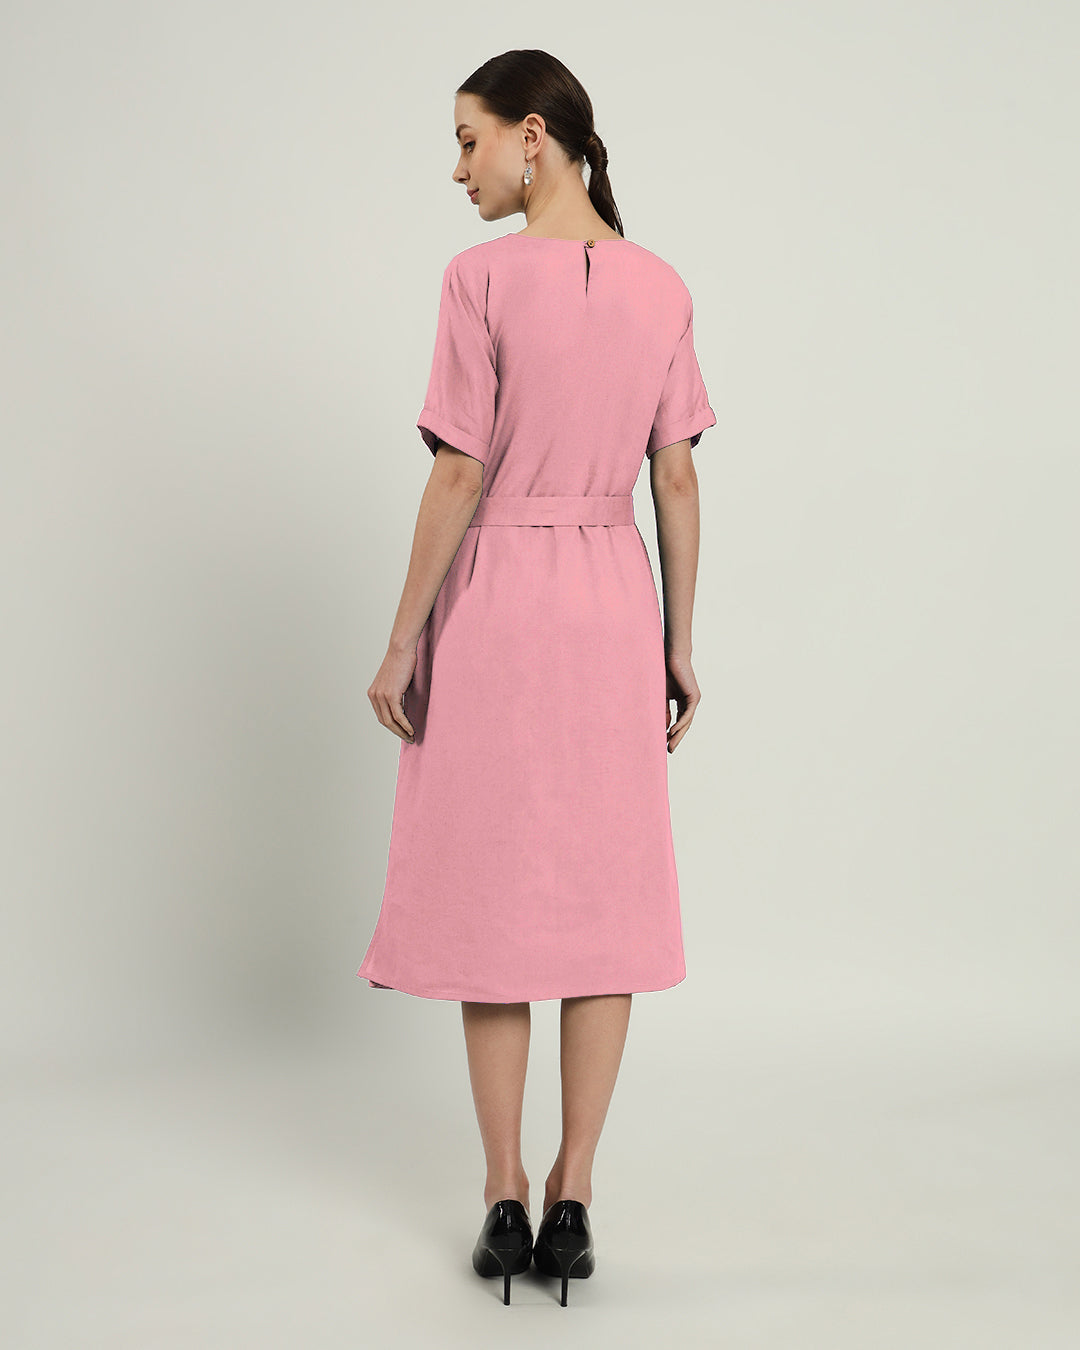 The Tayma Fondant Pink Dress